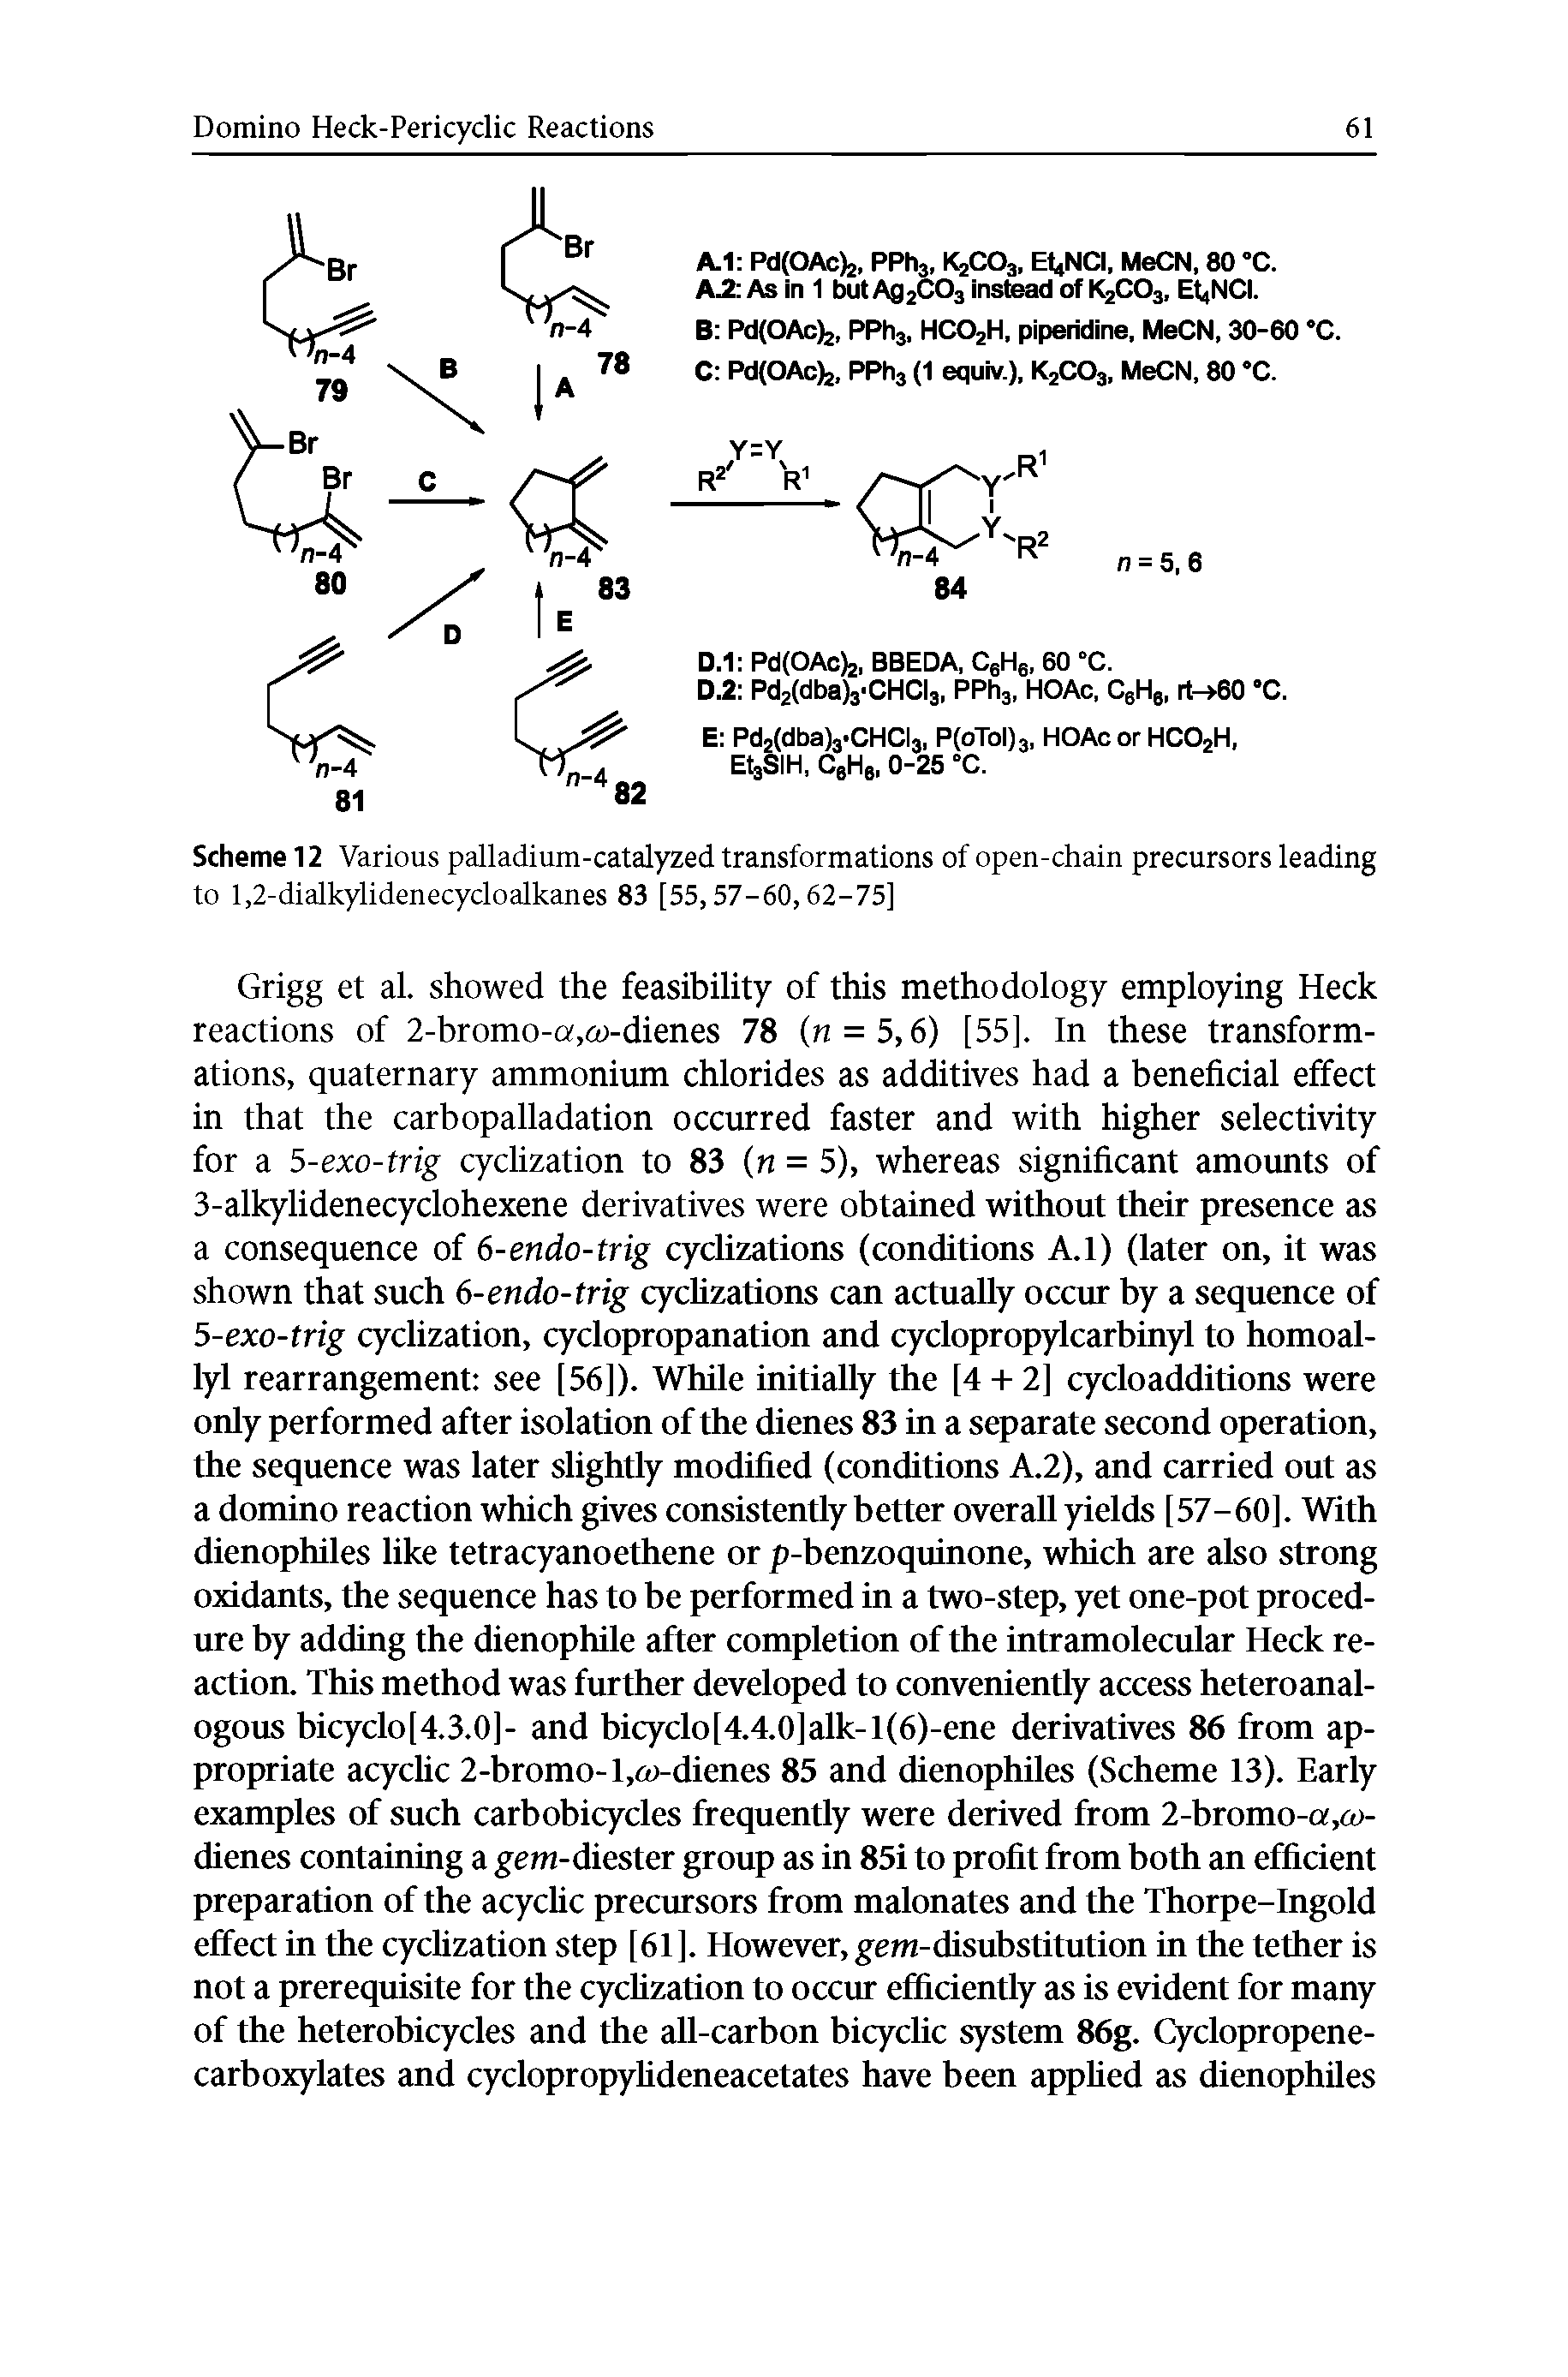 Scheme 12 Various palladium-catalyzed transformations of open-chain precursors leading to 1,2-dialkylidenecycloalkanes 83 [55,57-60,62-75]...